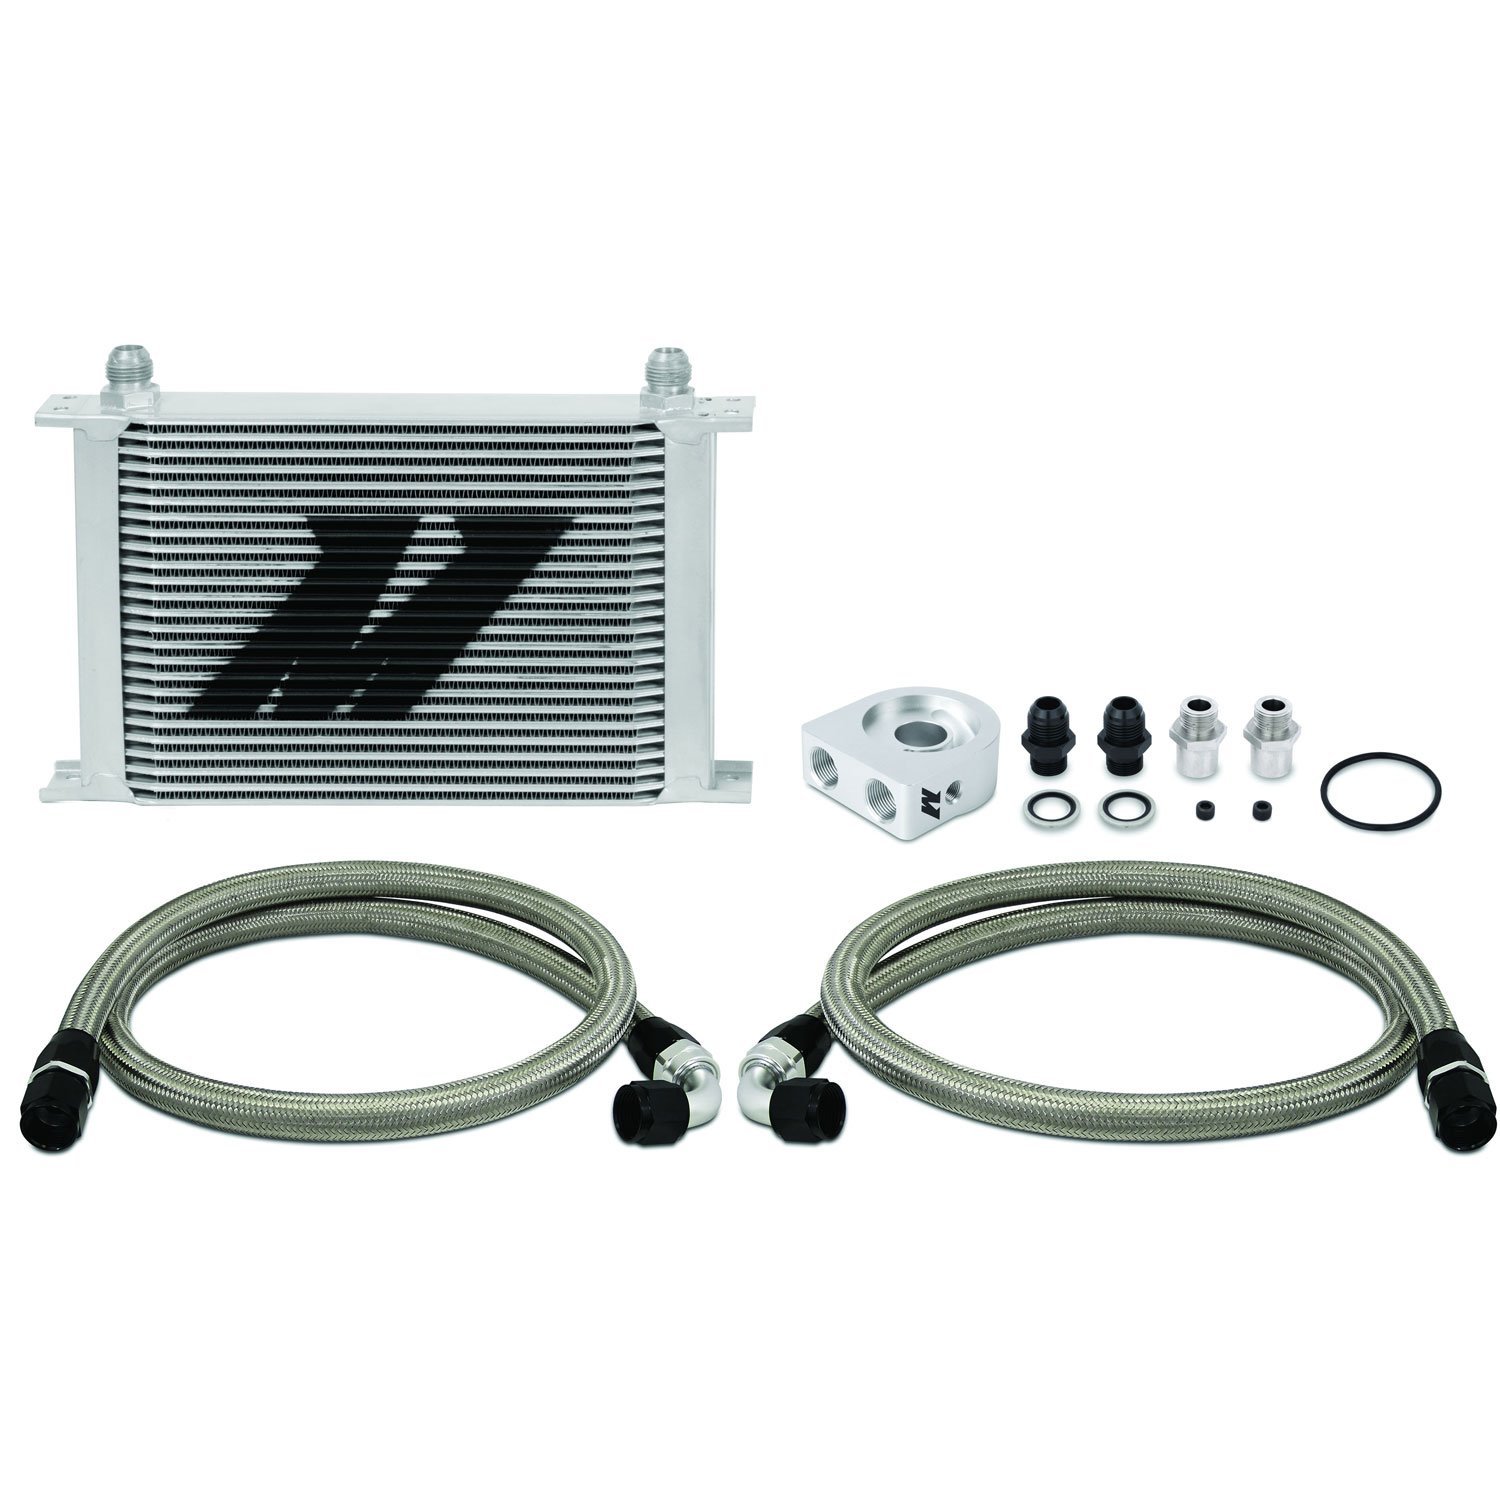 Universal Oil Cooler Kit 25 Row - MFG Part No. MMOC-UH